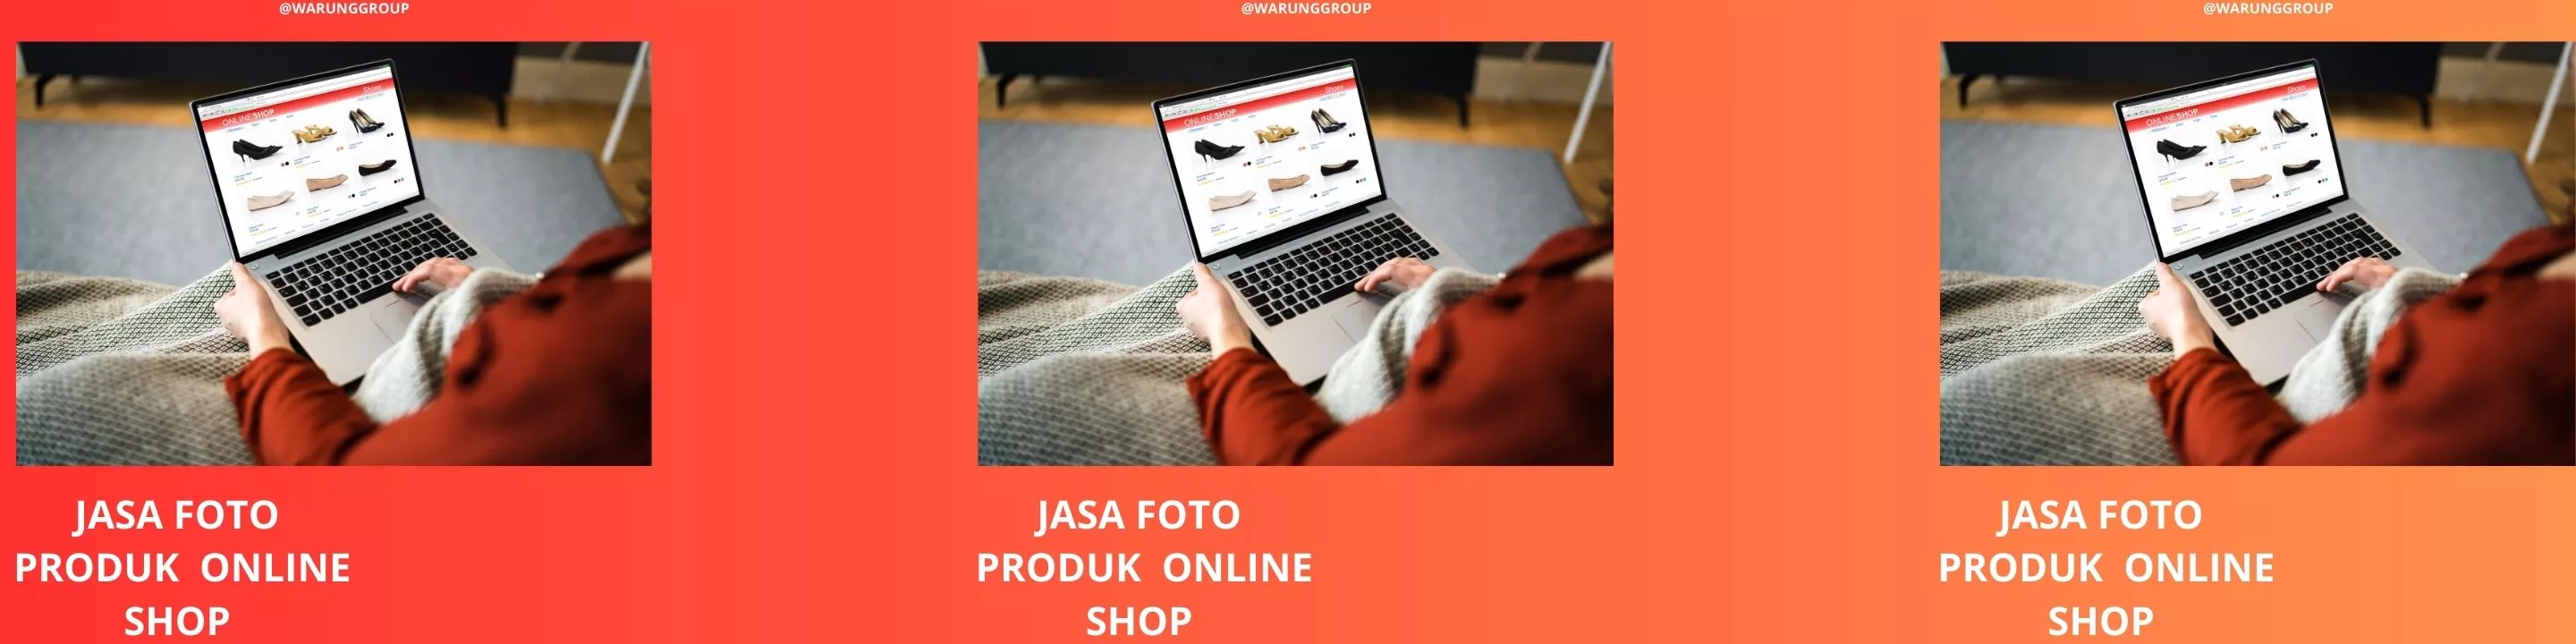 Jasa Foto Produk Online Shop